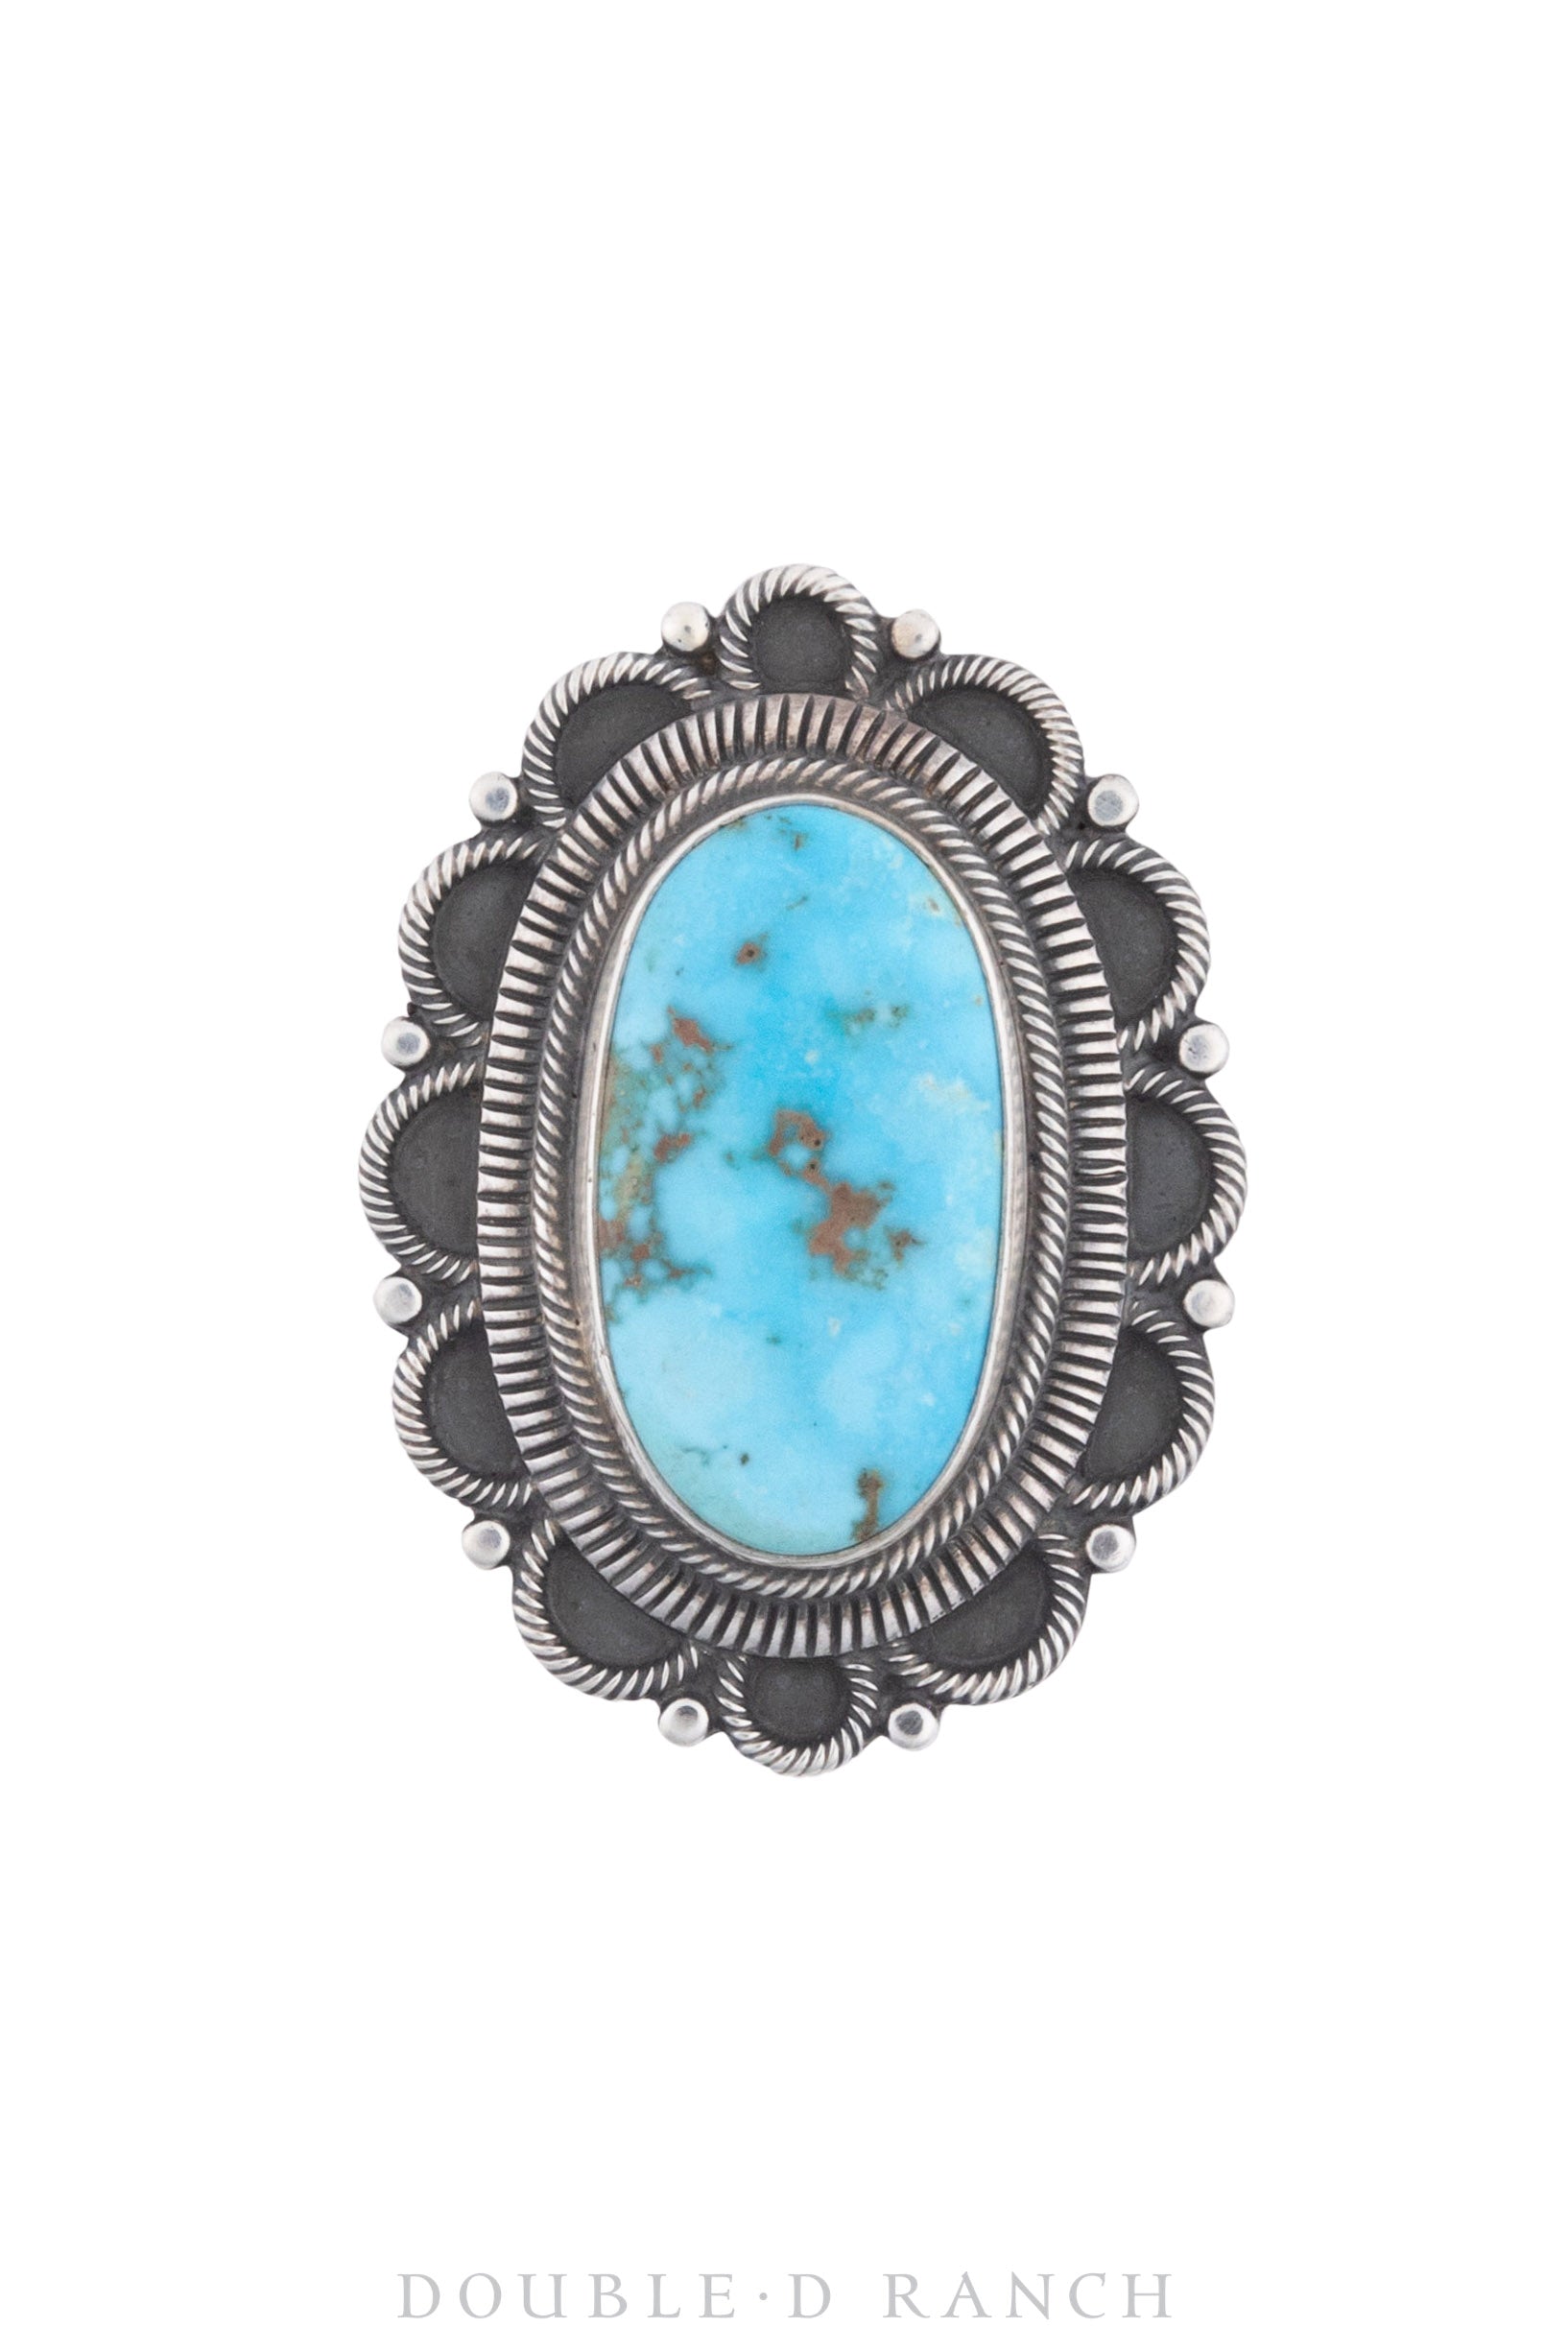 Ring, Natural Stone, Turquoise, Hallmark, Vintage, 1339